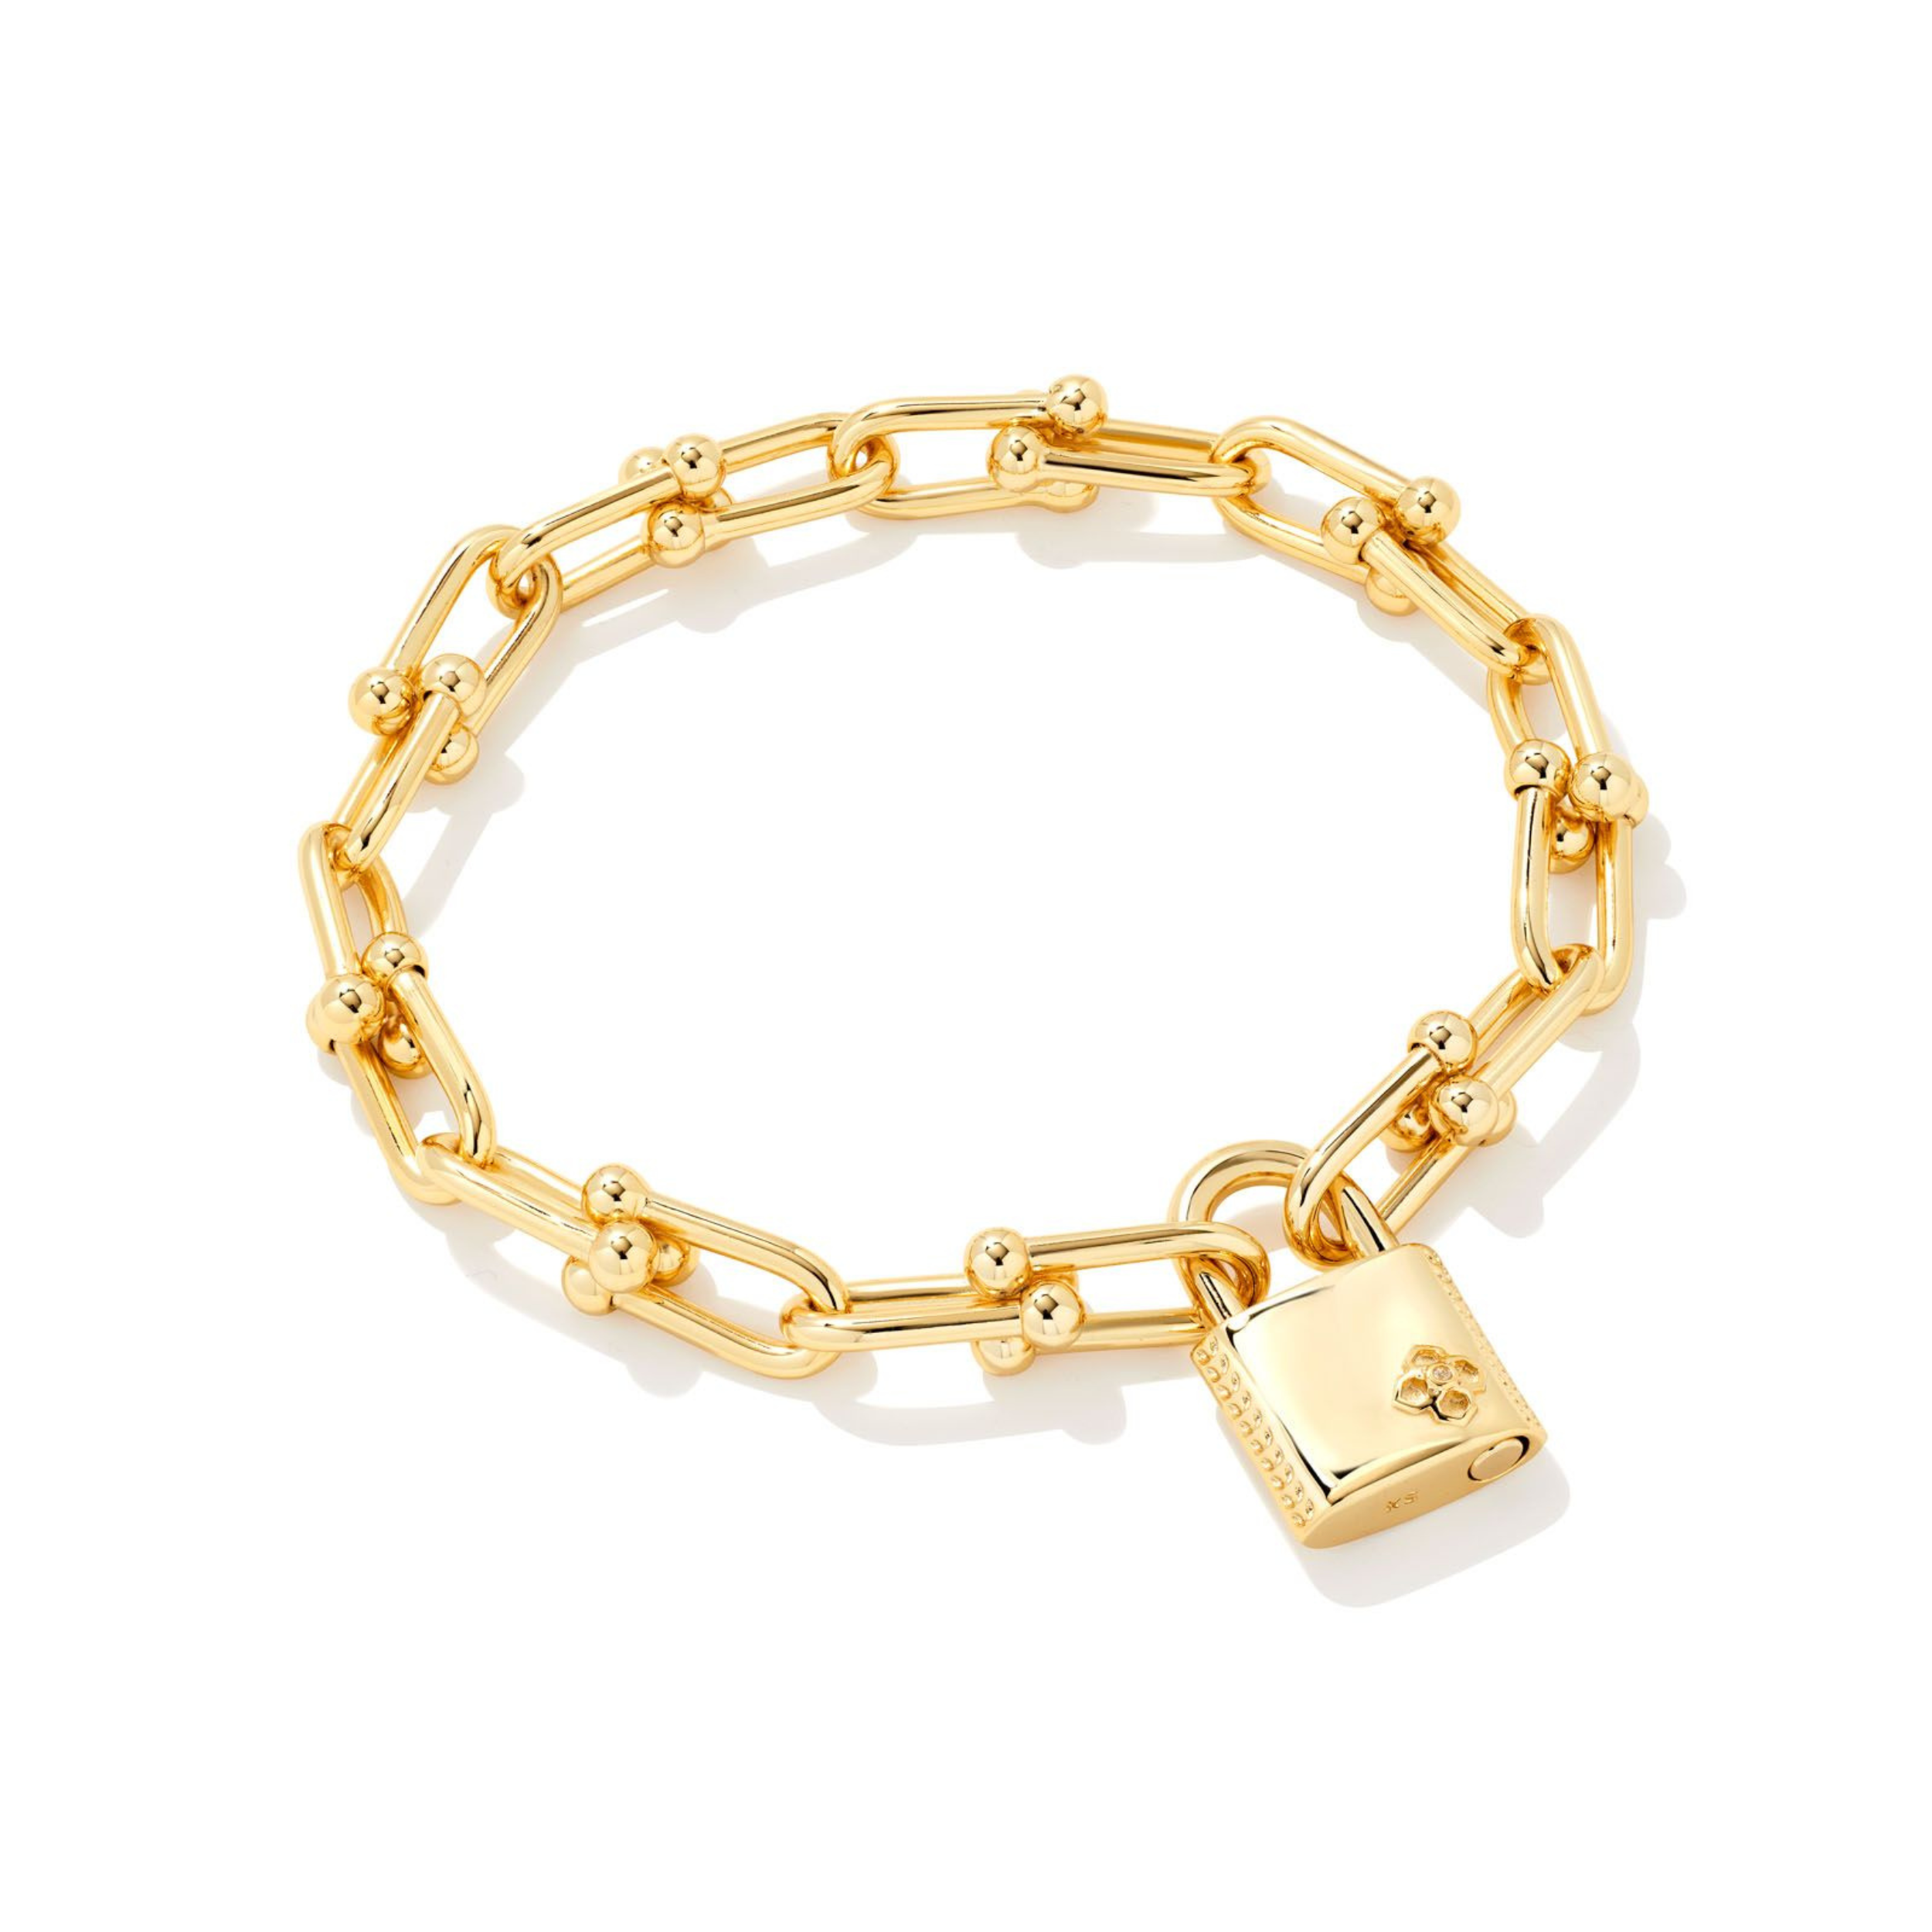 Kendra Scott | Jess Lock Chain Bracelet in Gold - Giddy Up Glamour Boutique